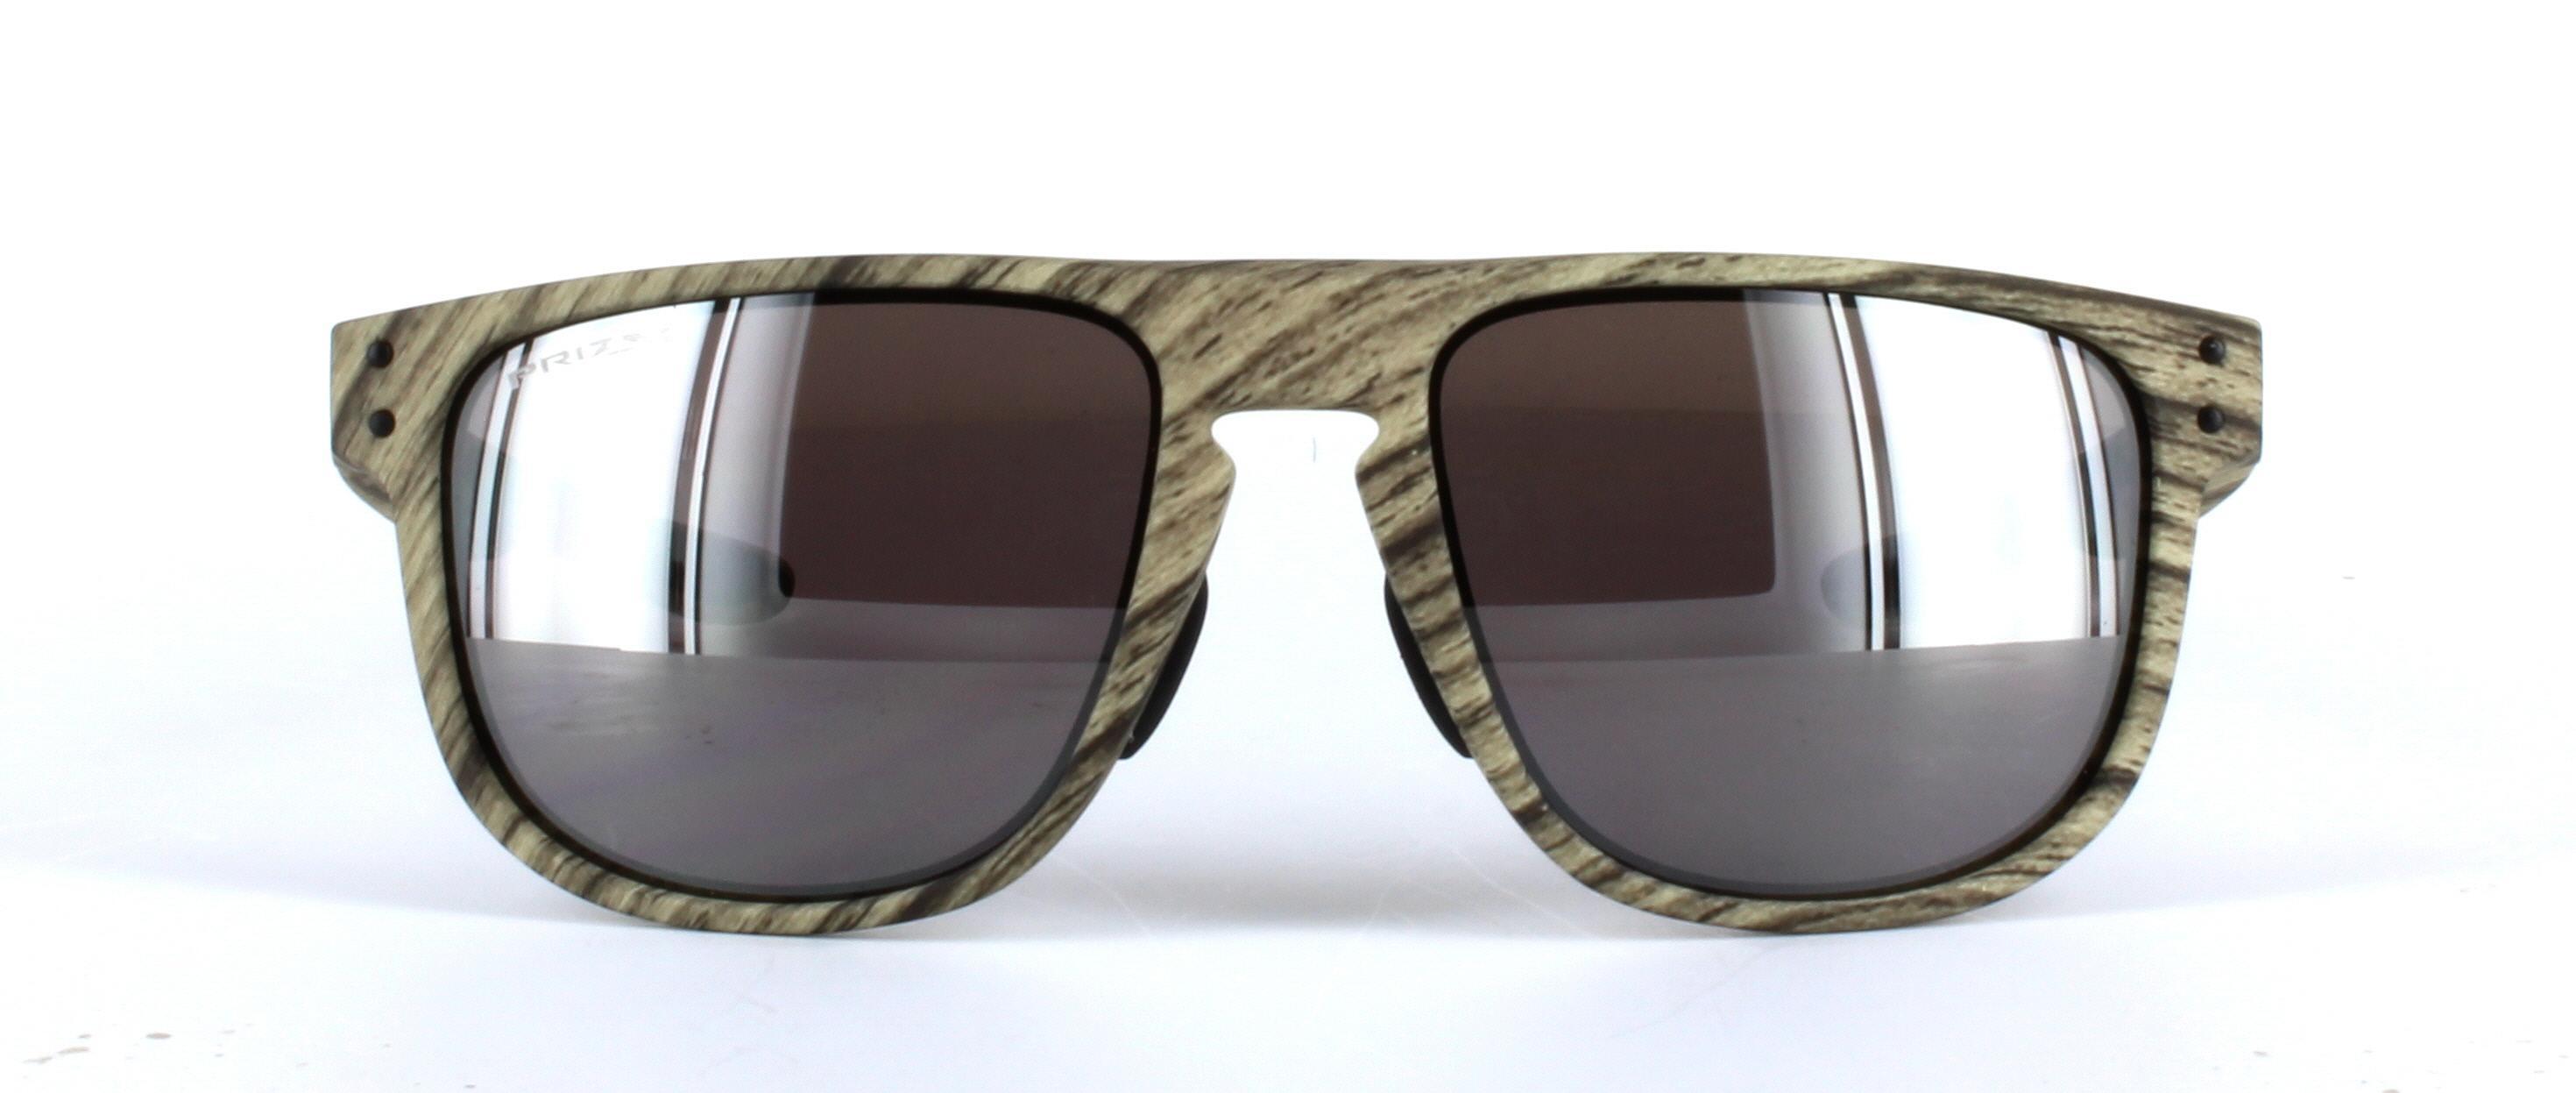 Oakley (O9379) Light Brown Full Rim Plastic Sunglasses - Image View 5